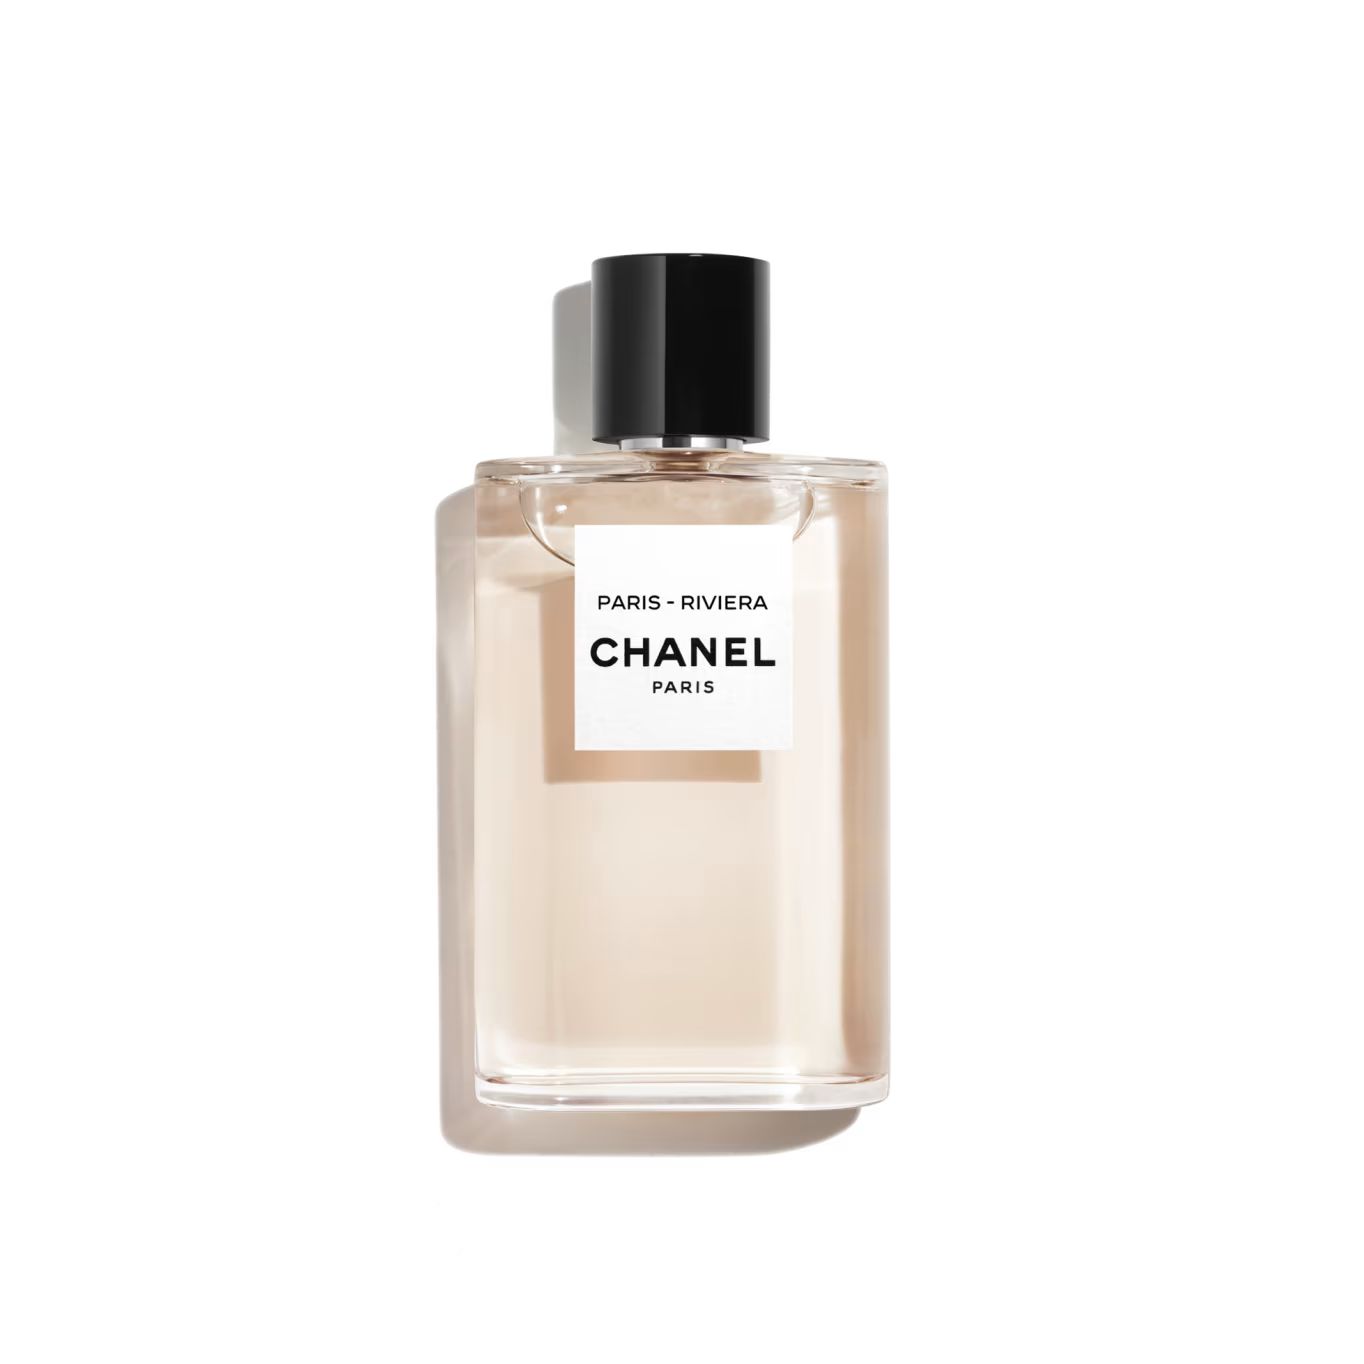 PARIS - RIVIERA | Chanel, Inc. (US)